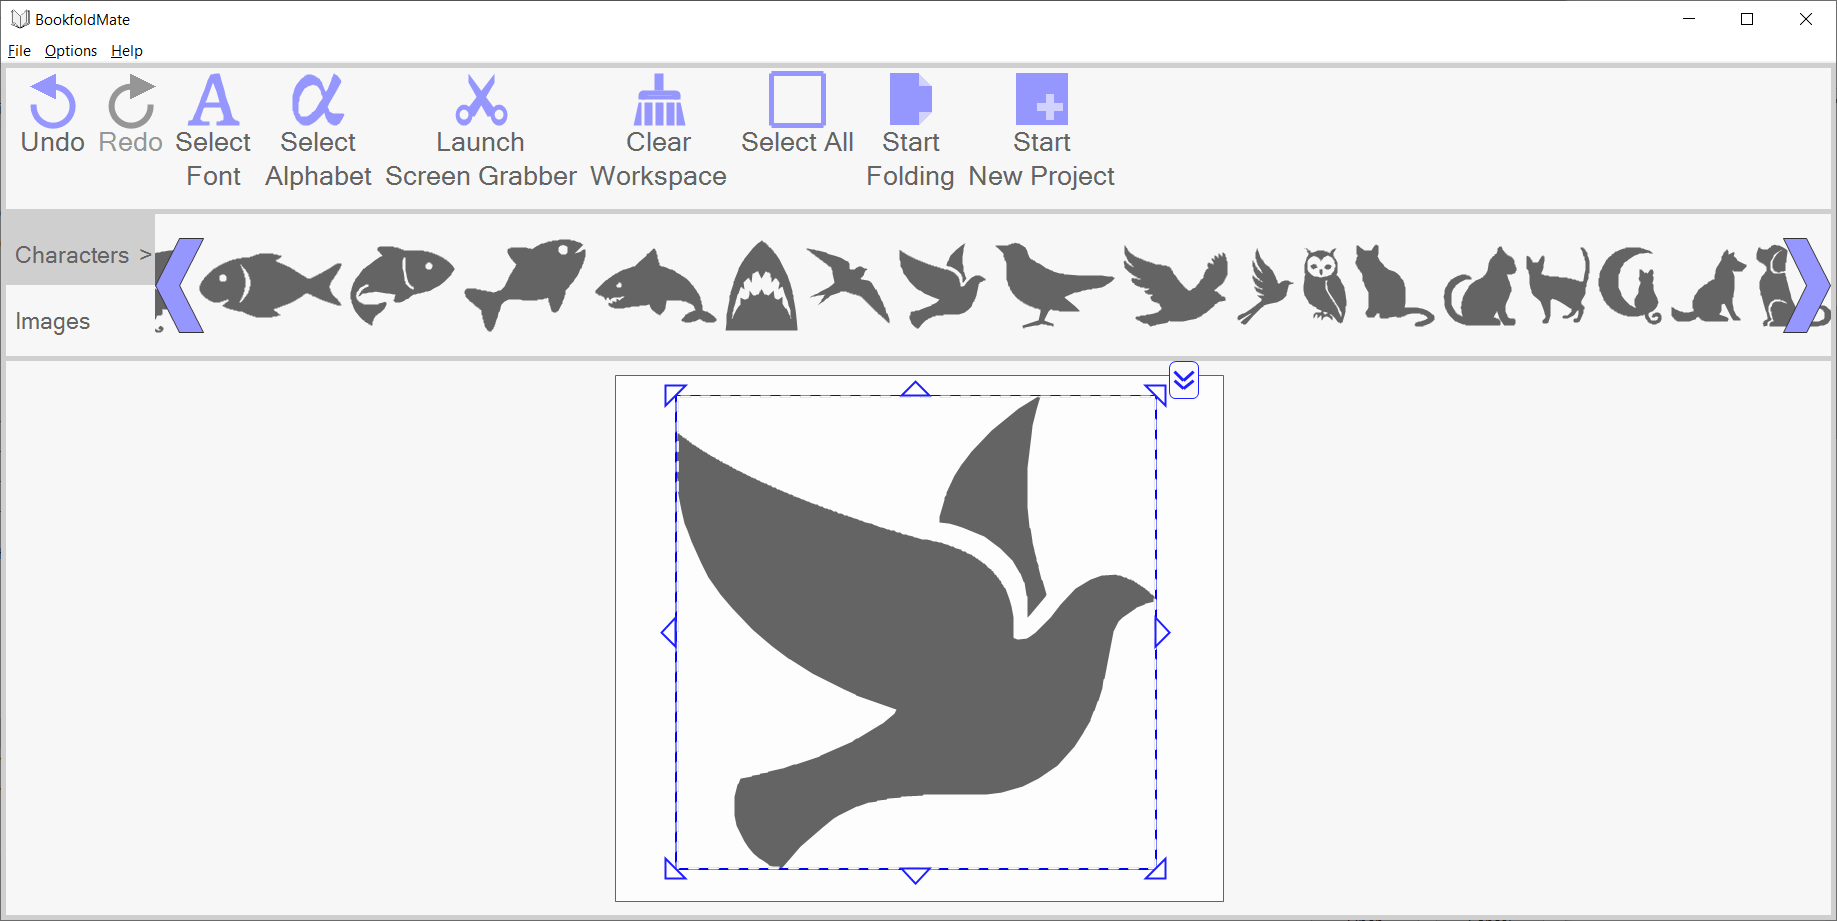 Main workspace using "dove" stock image